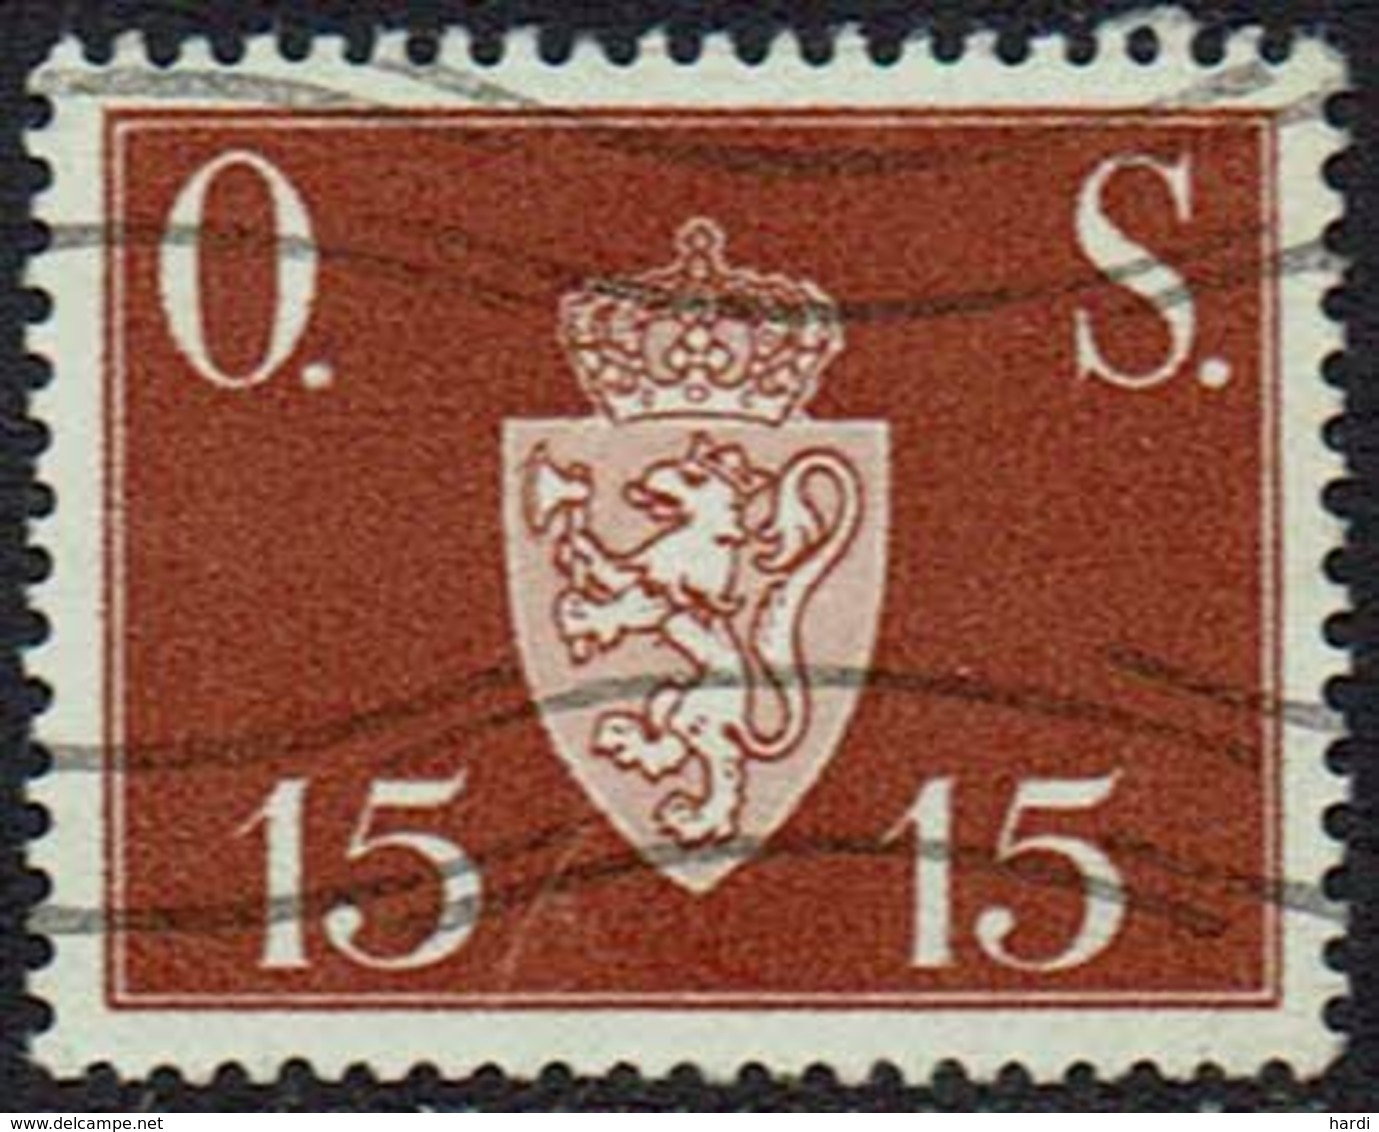 Norwegen DM, 1951, MiNr 63, Gestempelt - Service